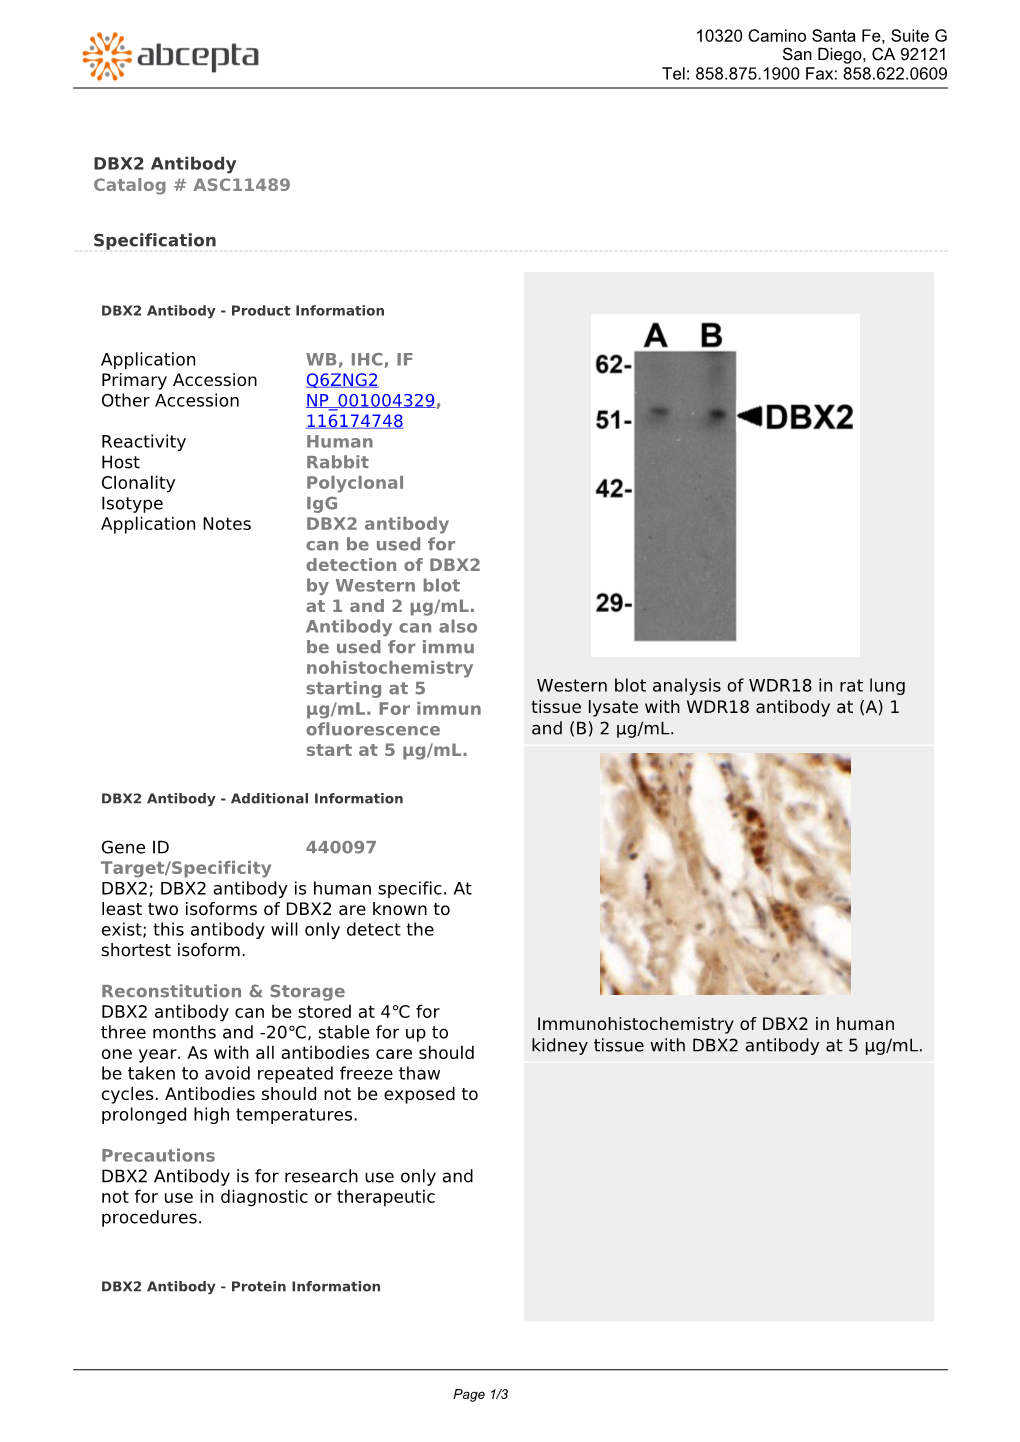 DBX2 Antibody Catalog # ASC11489